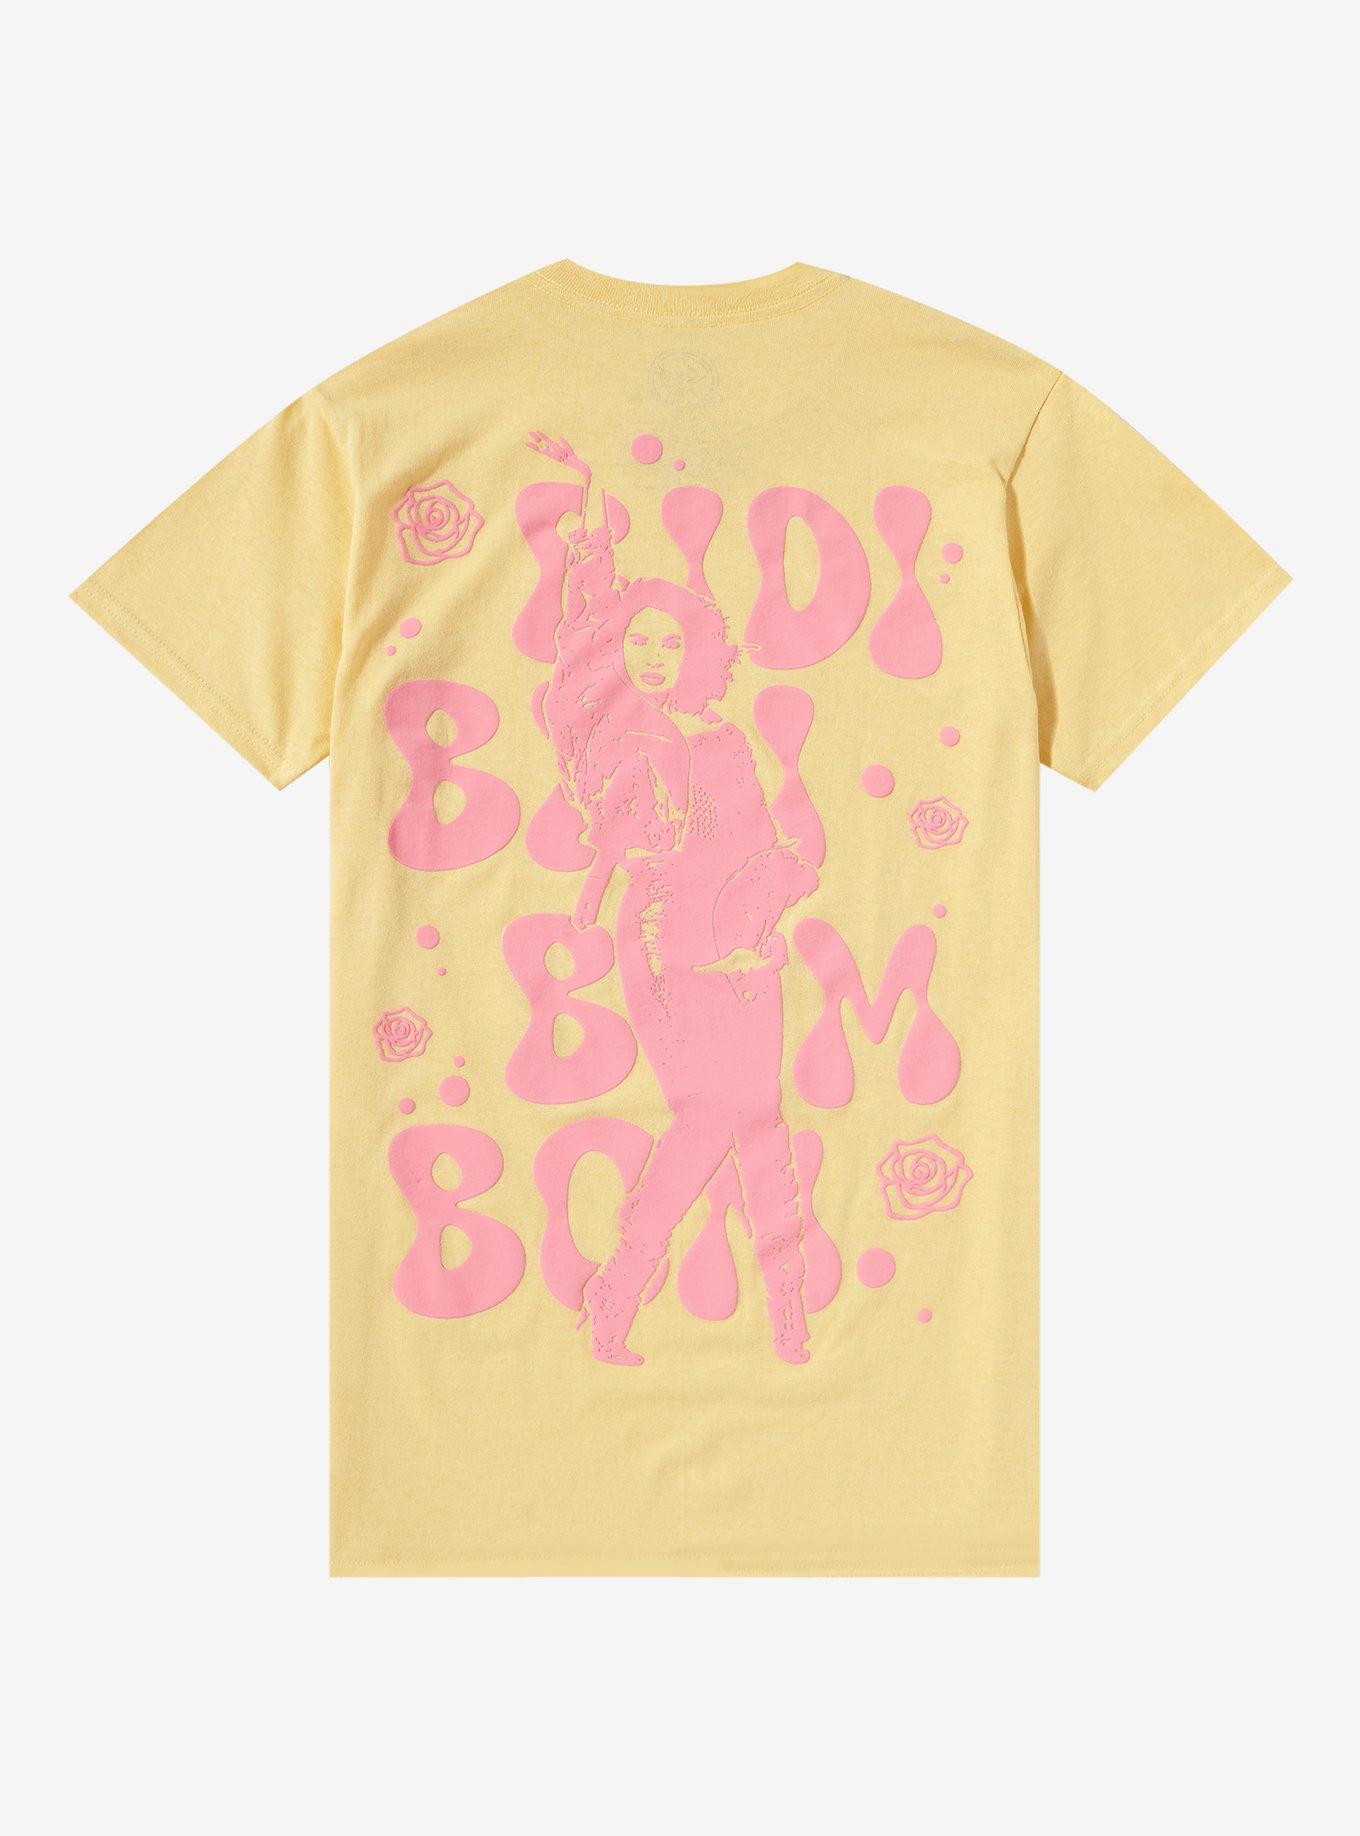 Selena Bidi Bidi Bom Bom Puff Paint Boyfriend Fit Girls T-Shirt, , alternate